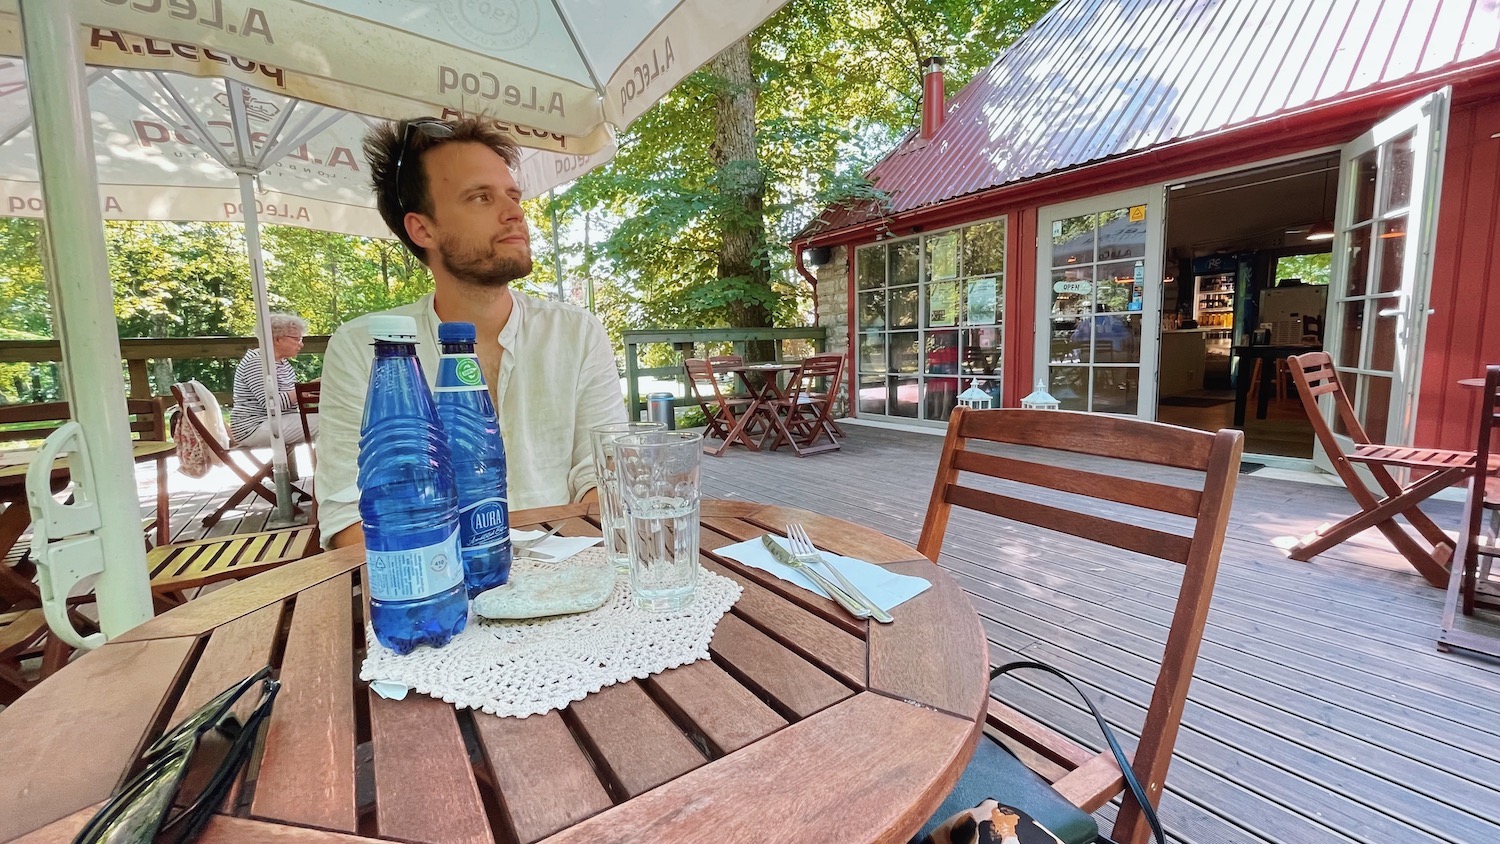 Beautiful eating place in Toila park in Estonia, Eesti Paigad